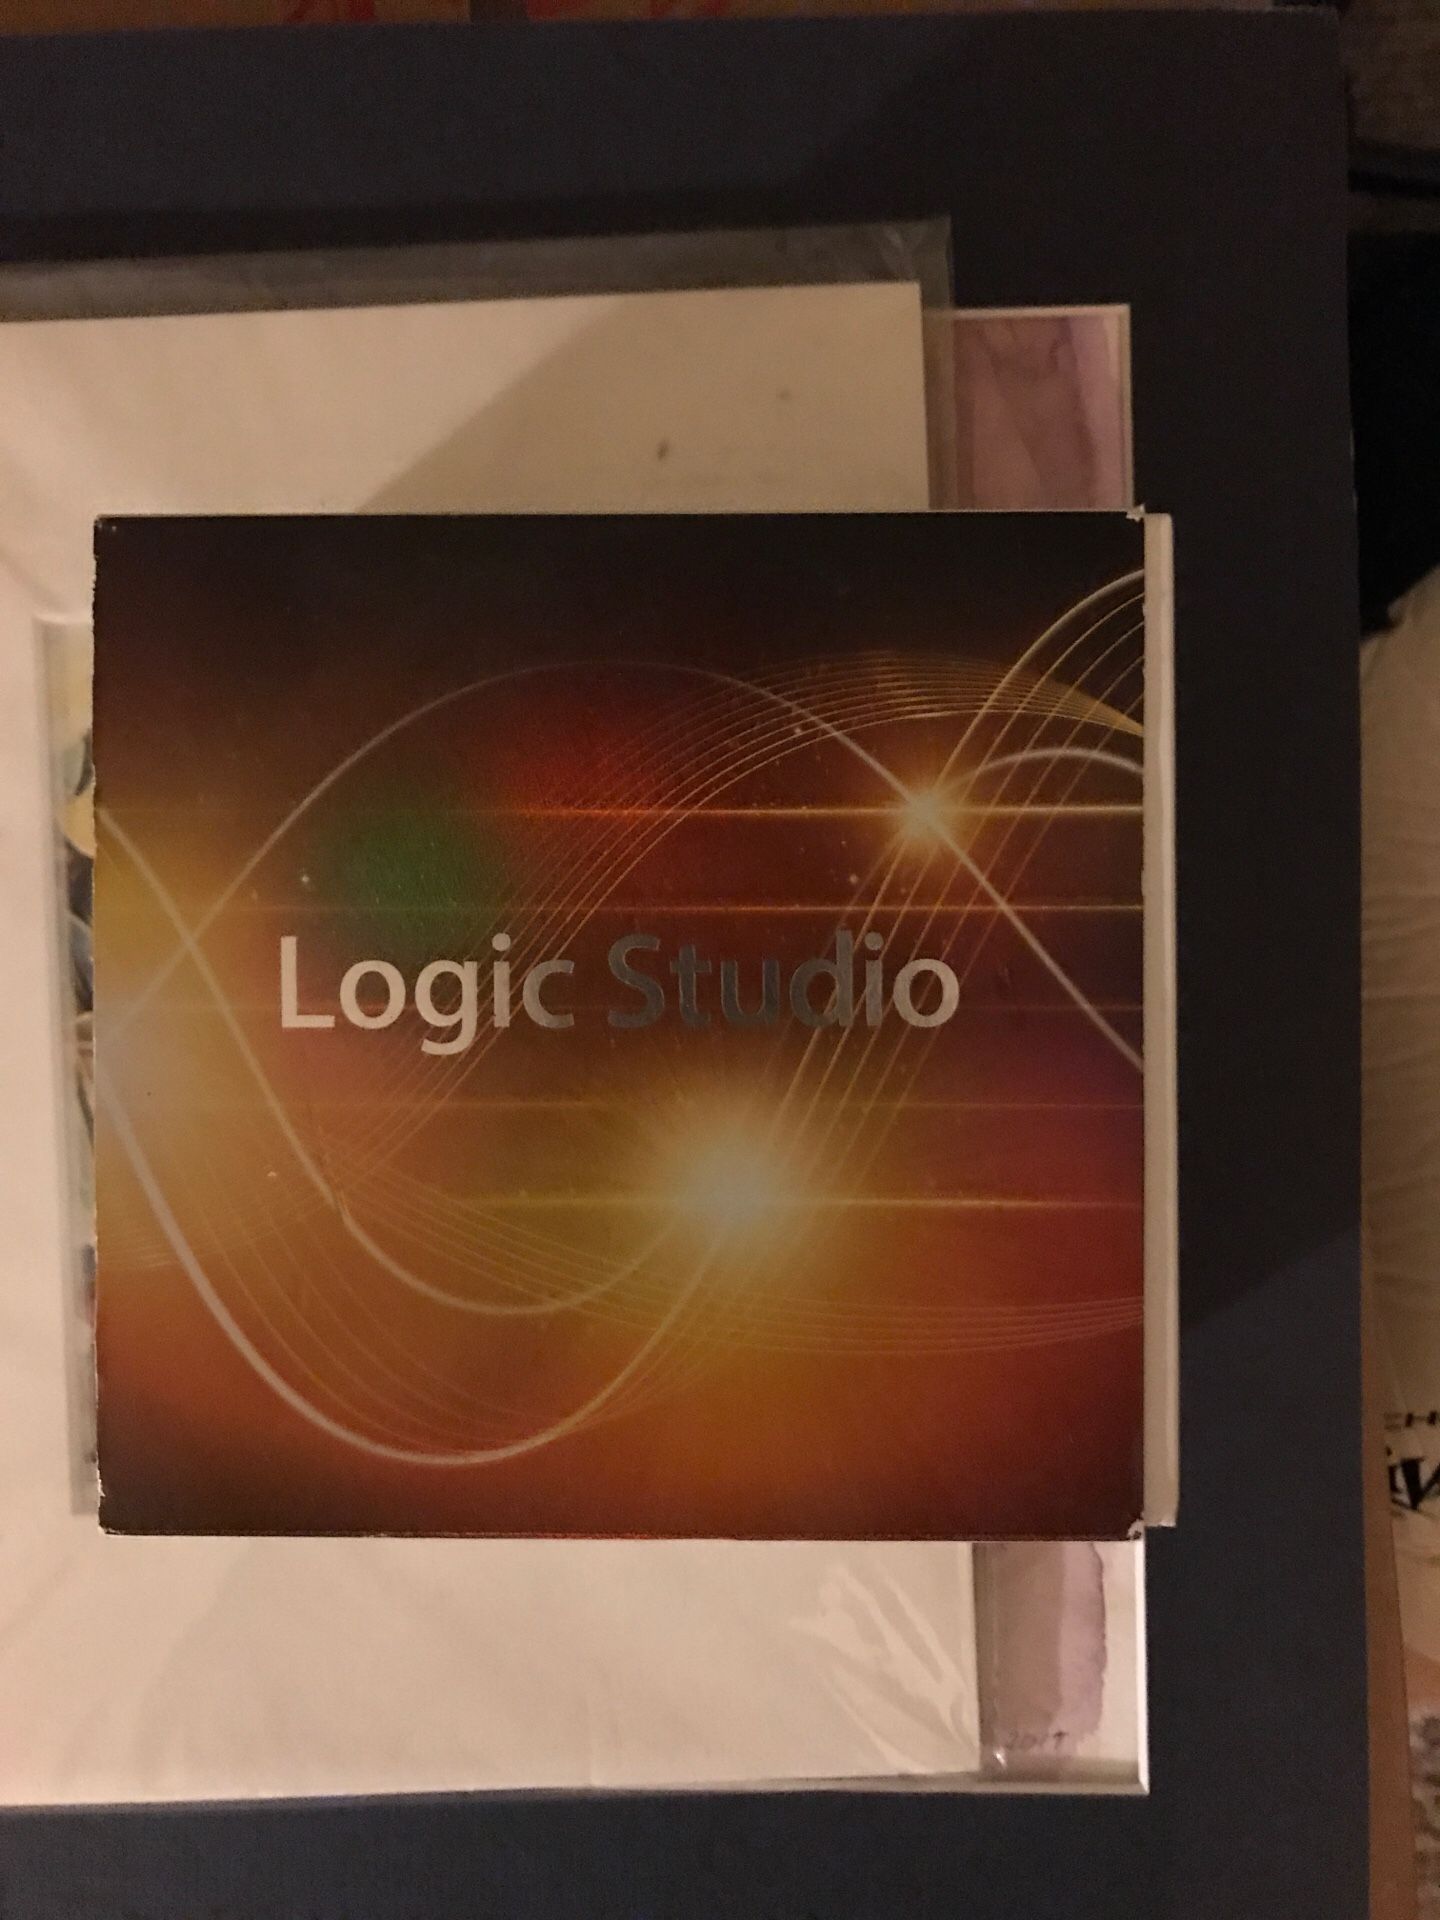 Logic 9 for free!